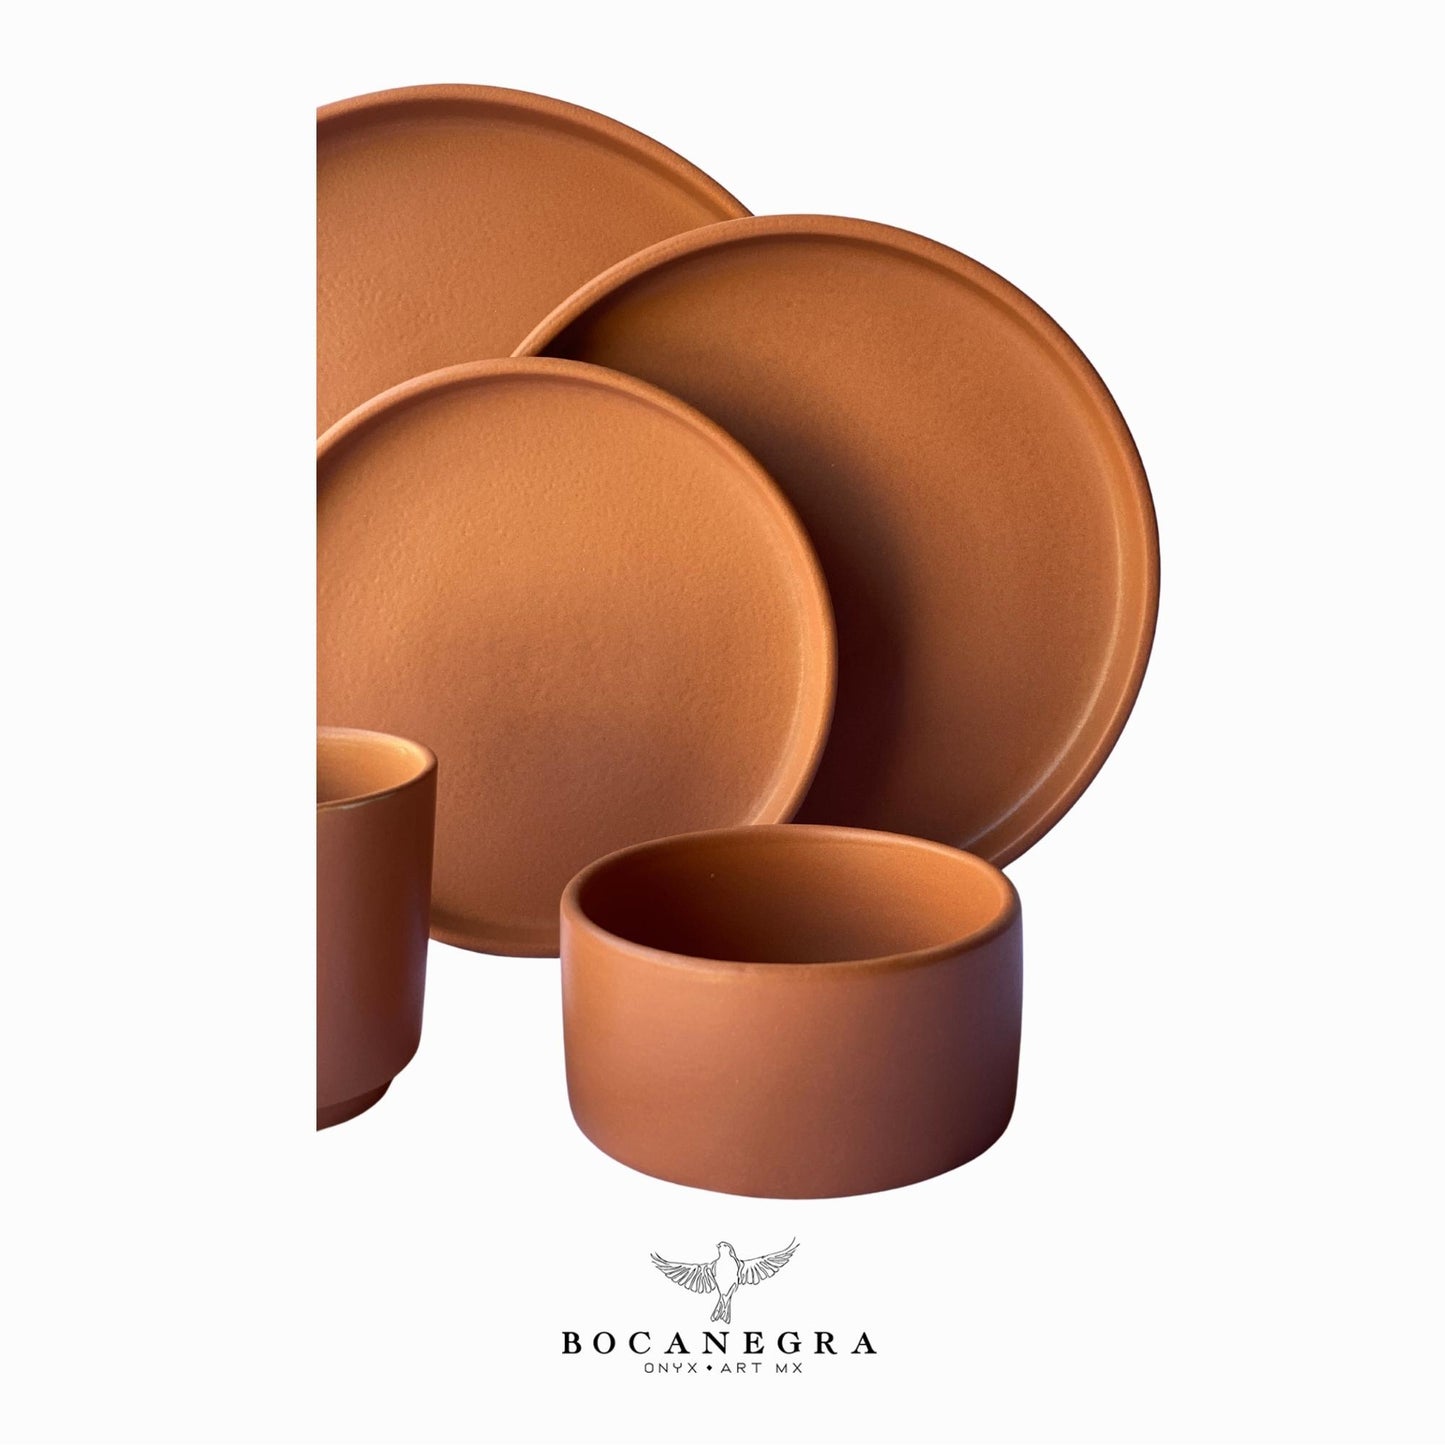 Handmade ceramic dinnerware set - Terracota Ceramic tableware (5 piece set)